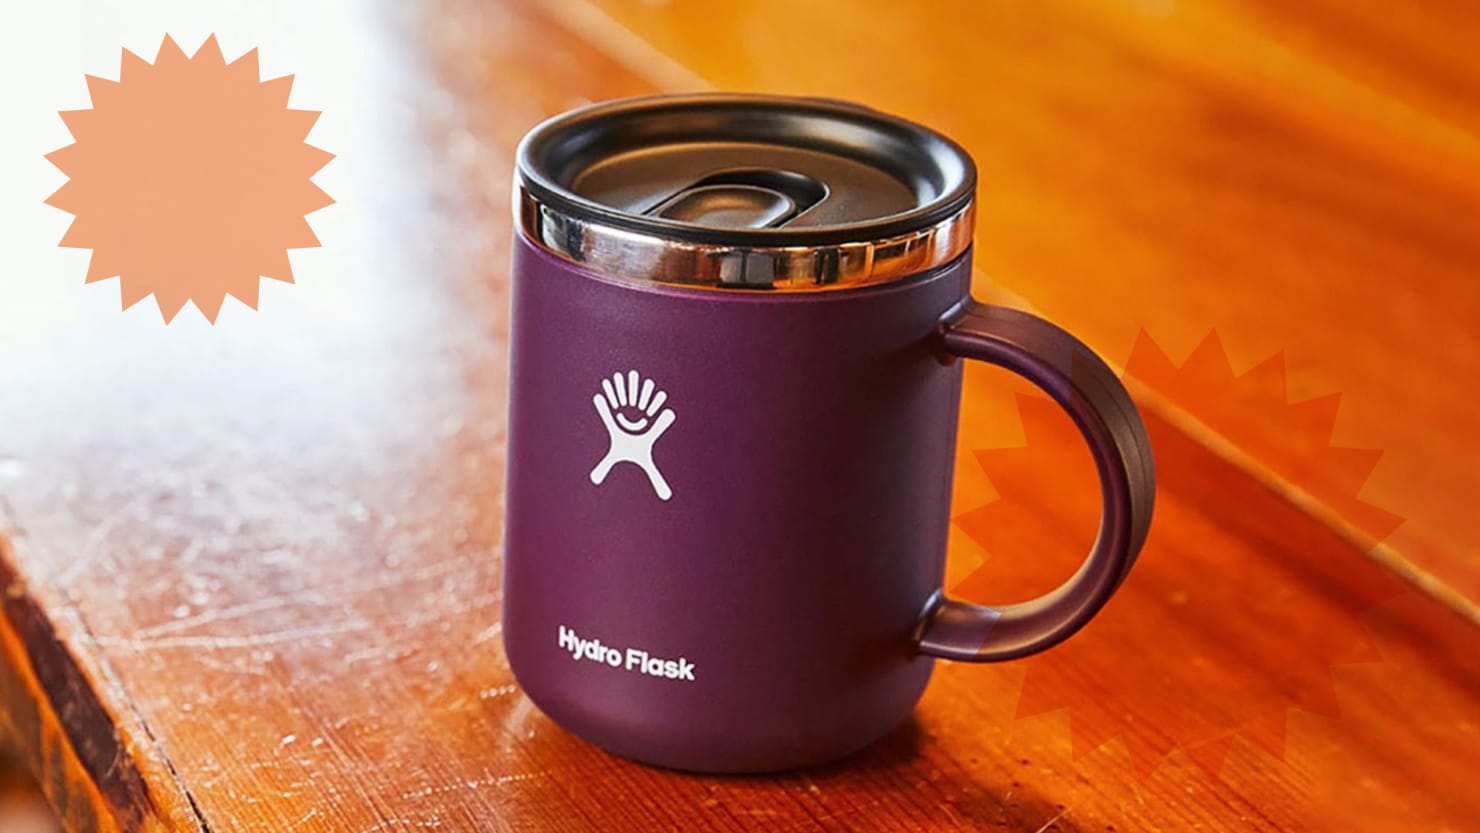 Promotional Hydro Flask Coffee Mug 12oz - Custom Promotional Products